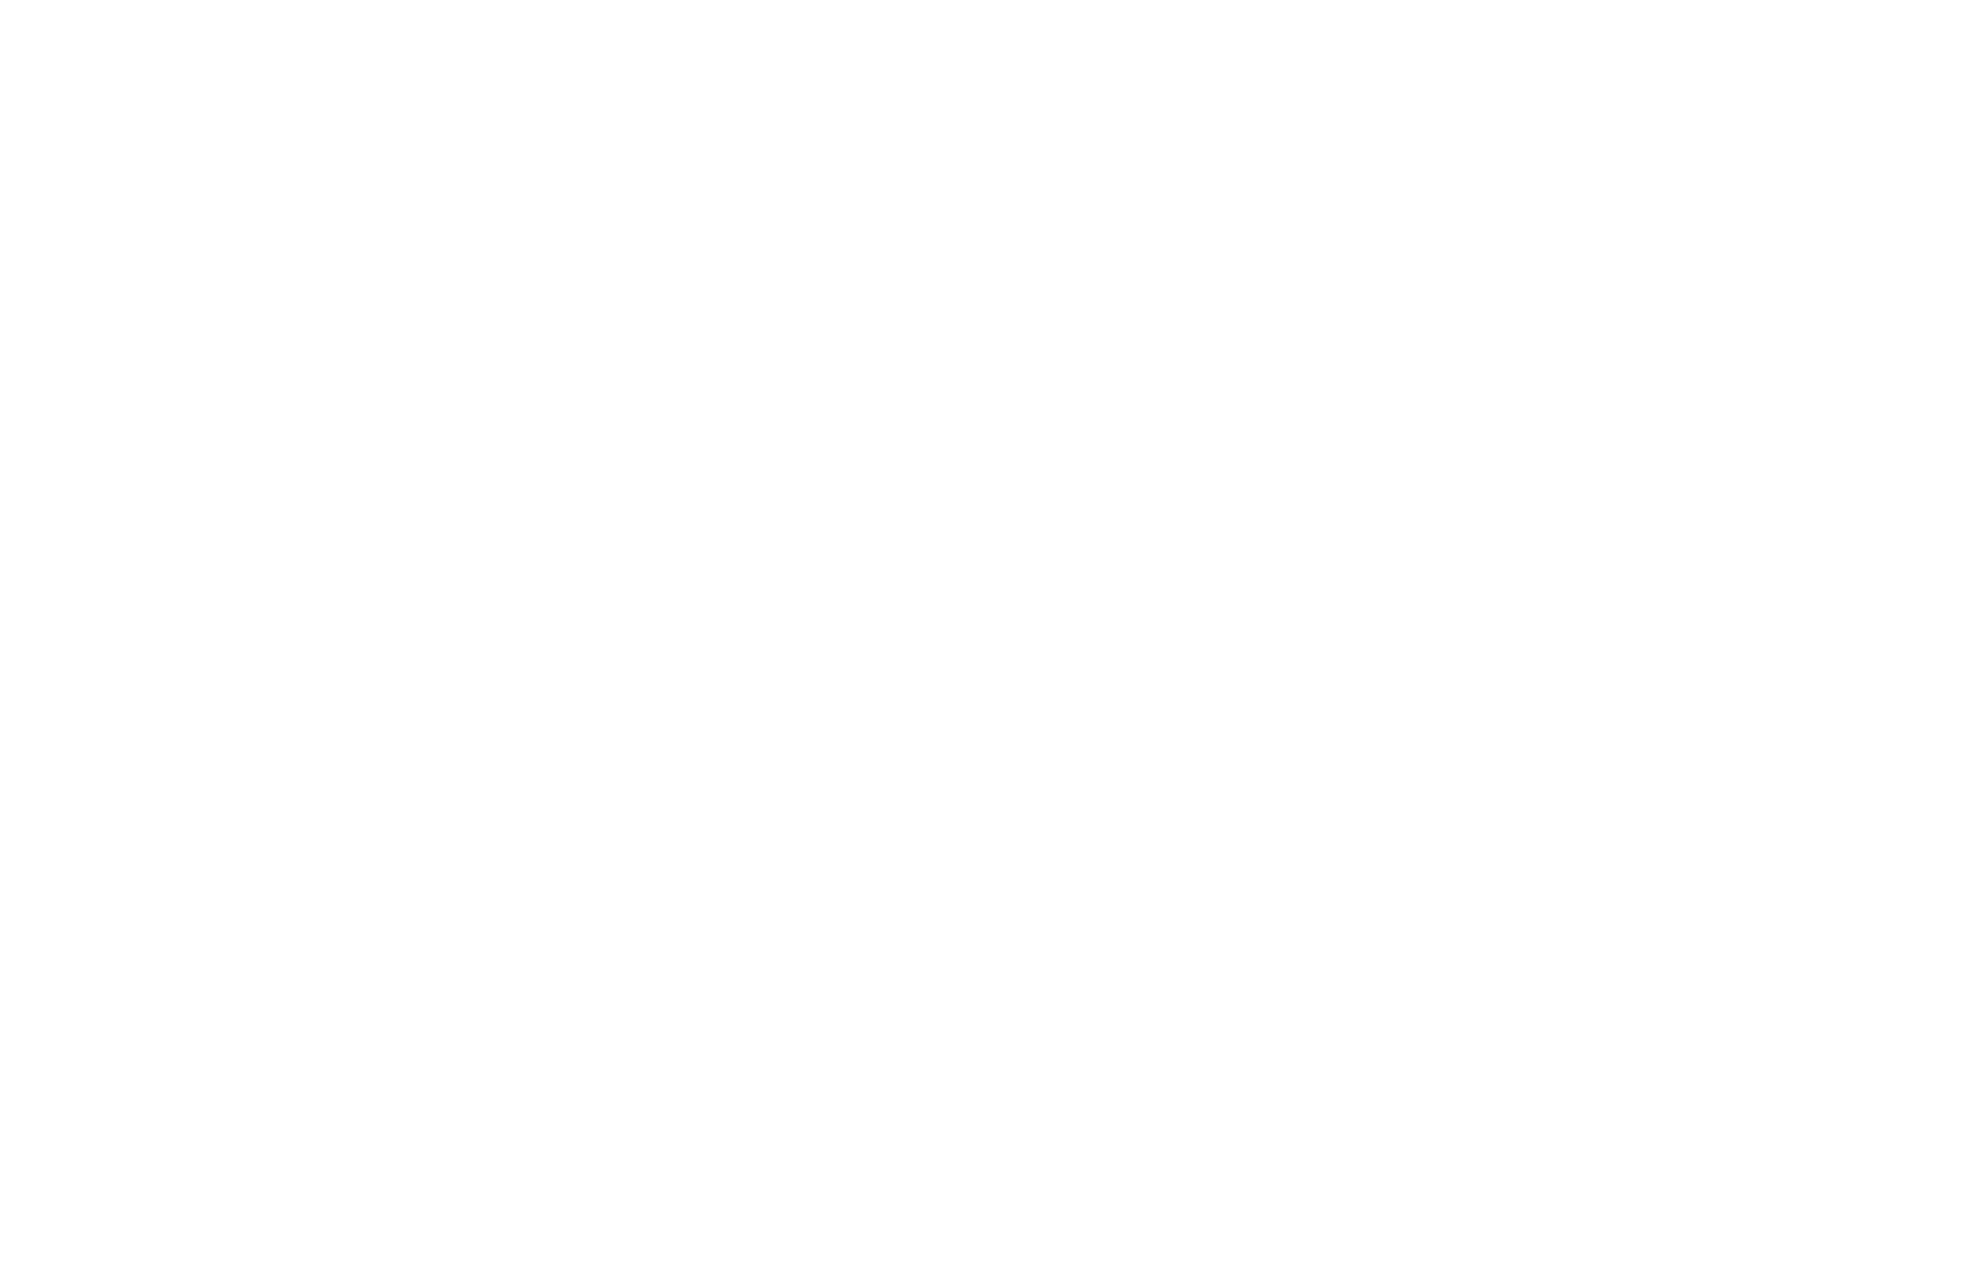 Nahuel and the Magic Book logo